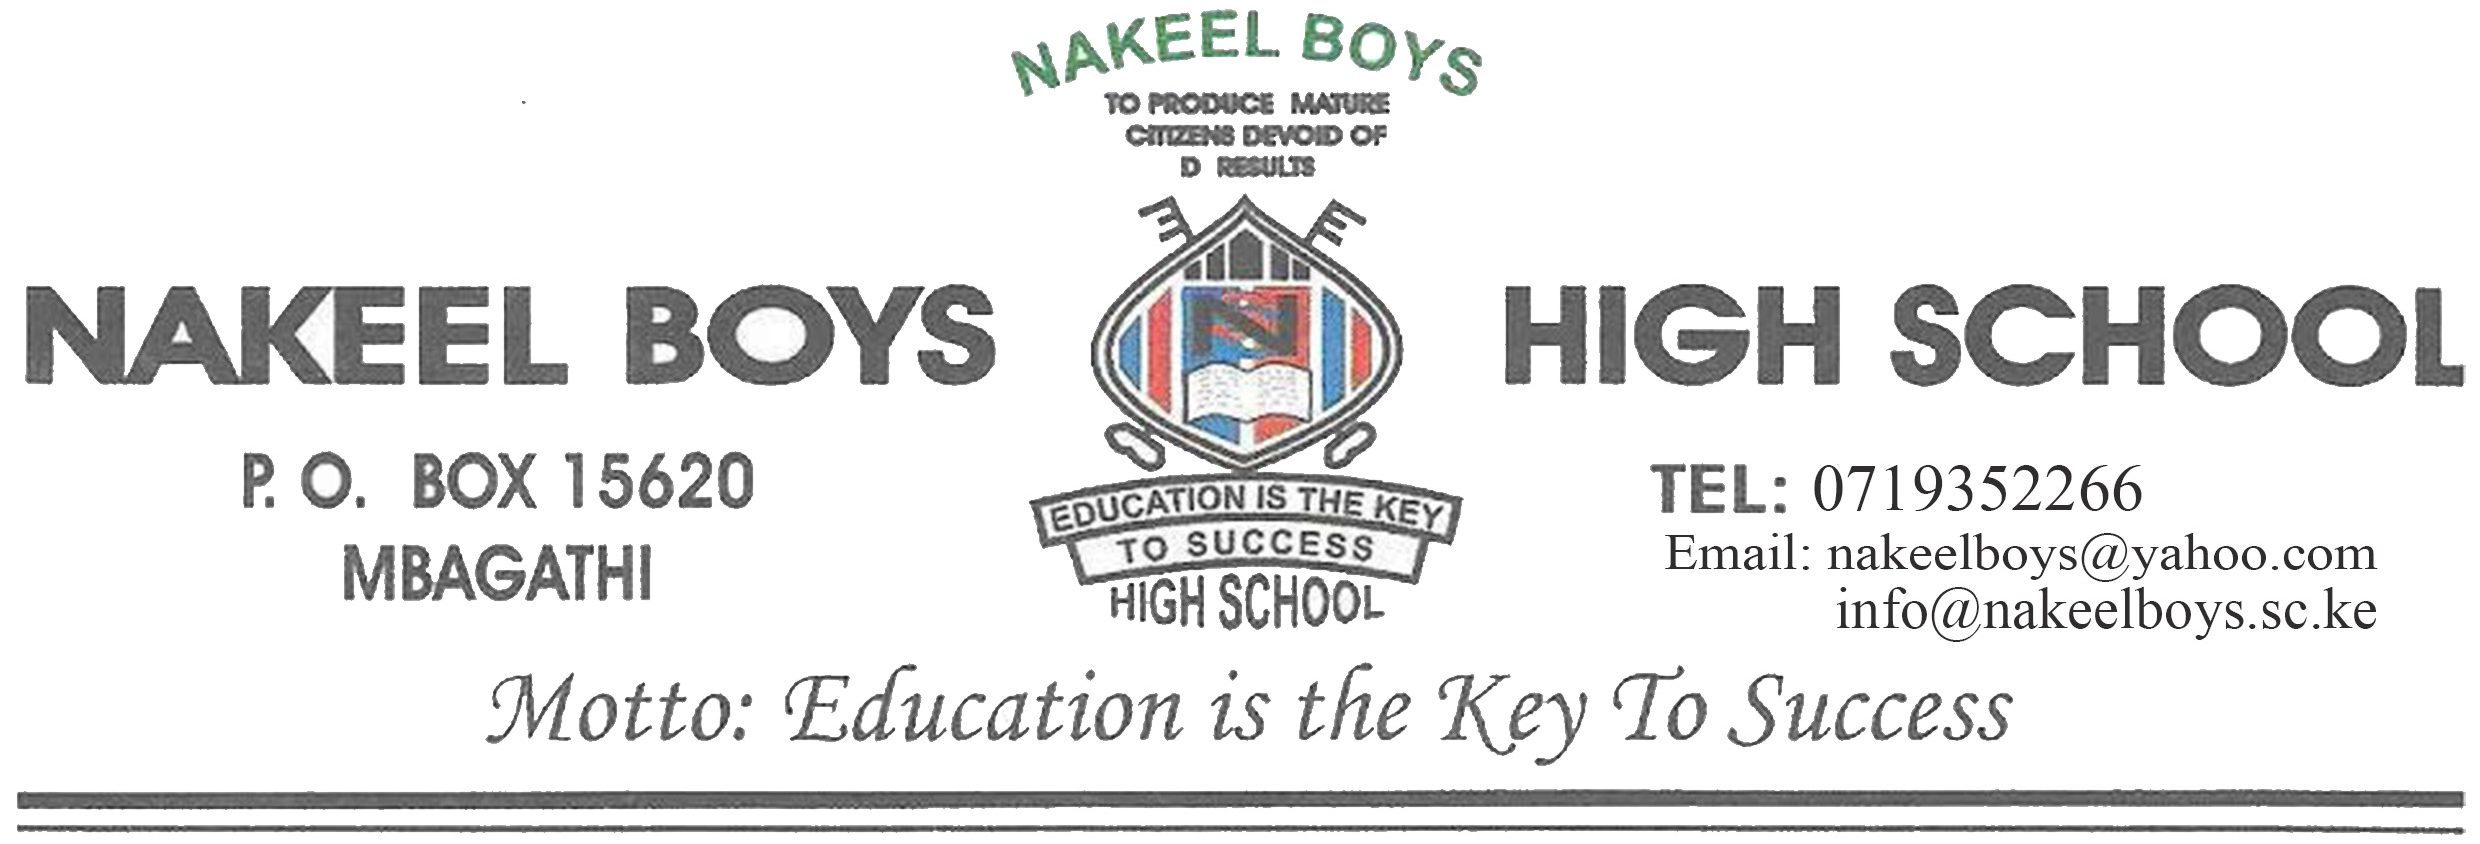 Nakeel Boys High School